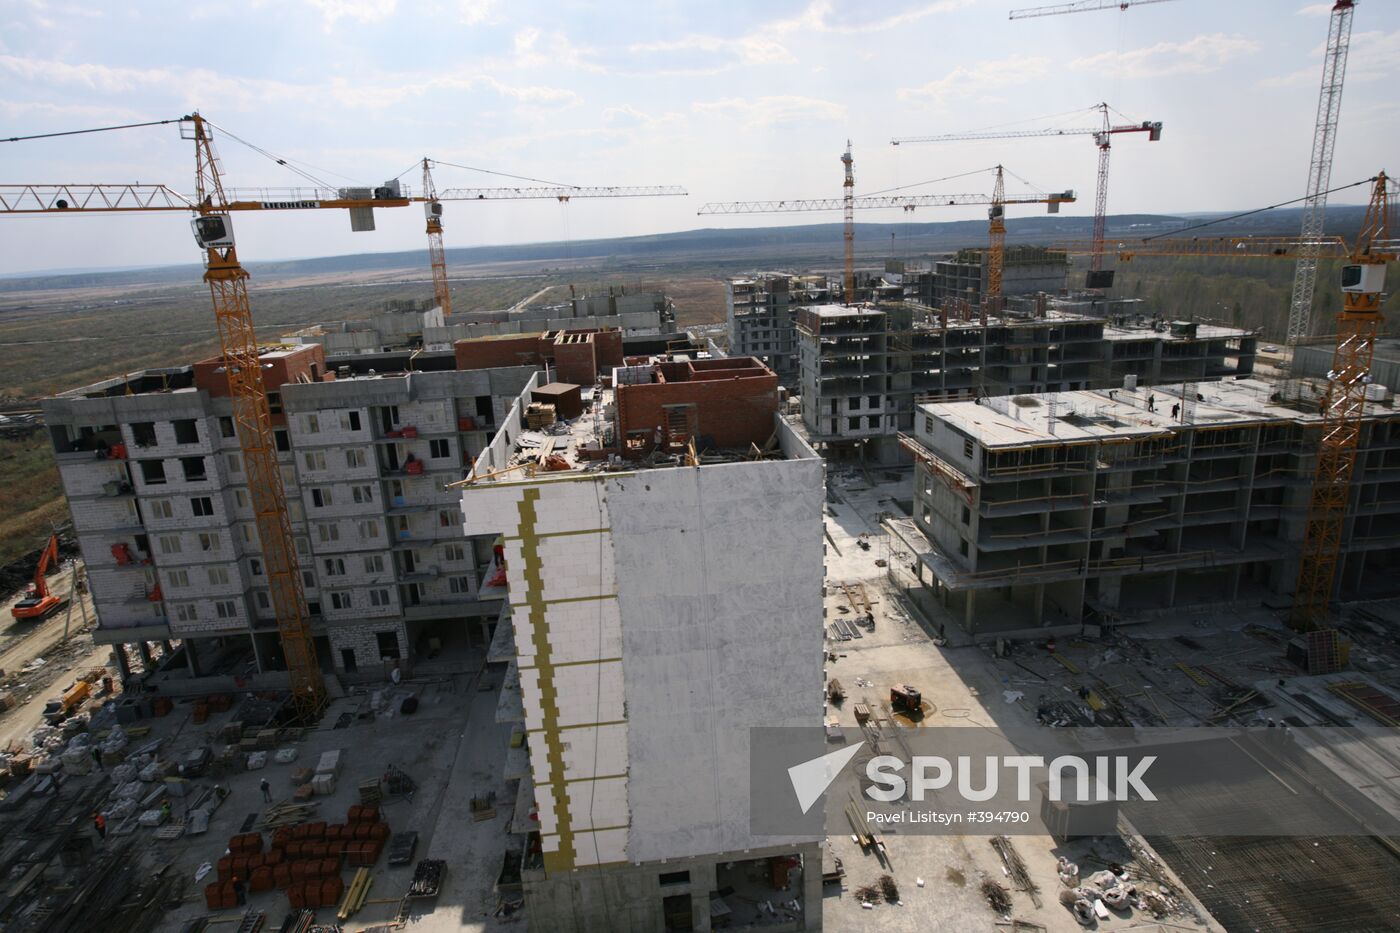 Akademichesky - a new housing development in Yekaterinburg